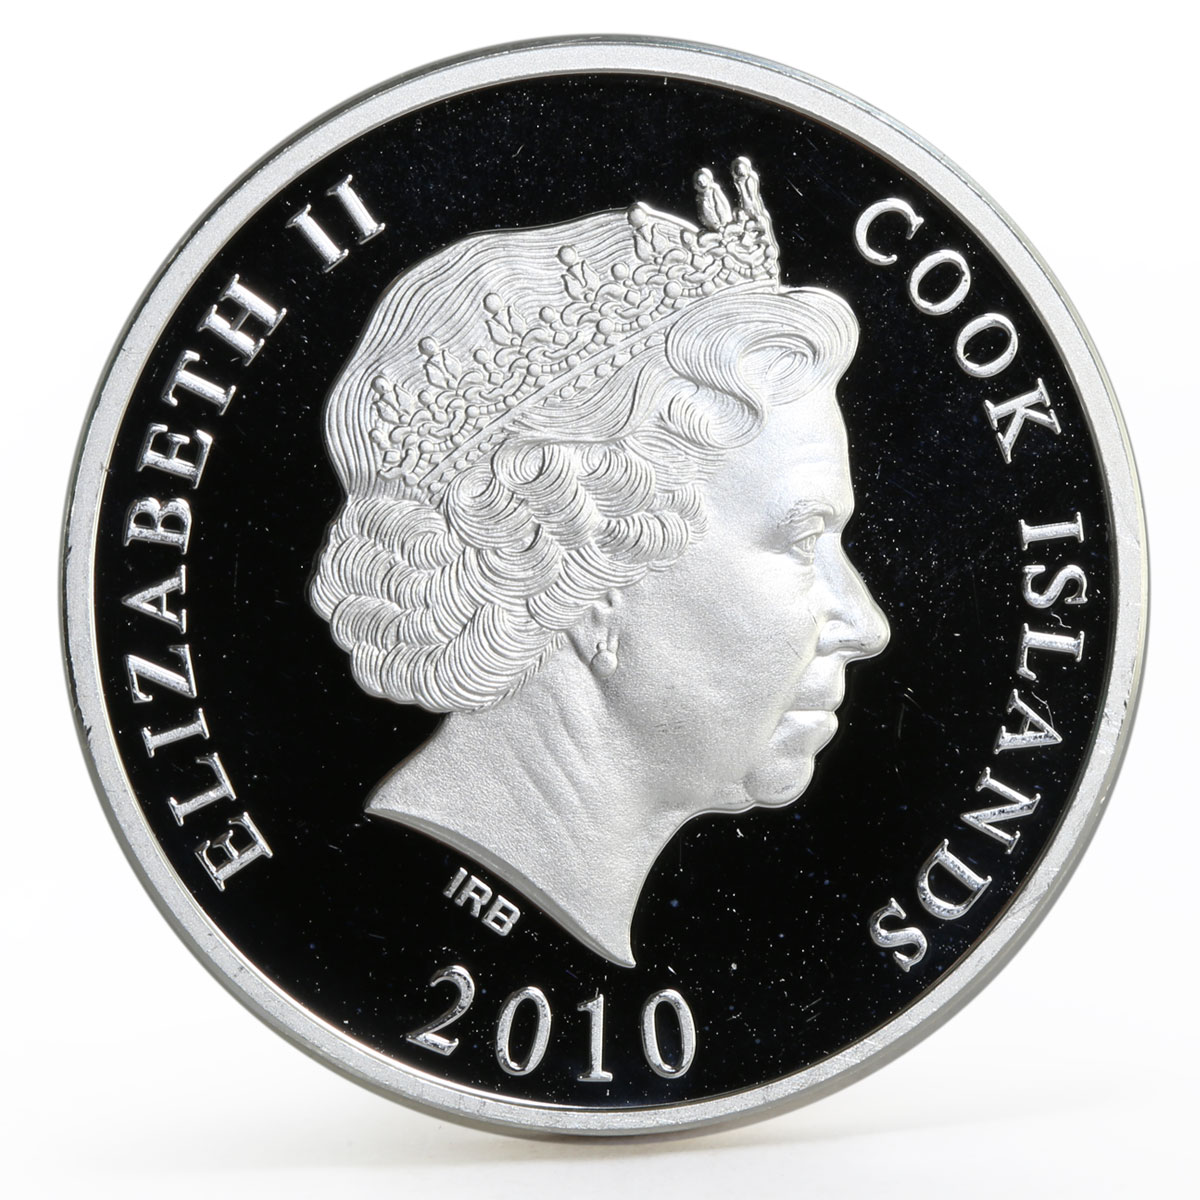 Cook Islands 10 dollars World Monuments series Belgium Atomium silver coin 2010